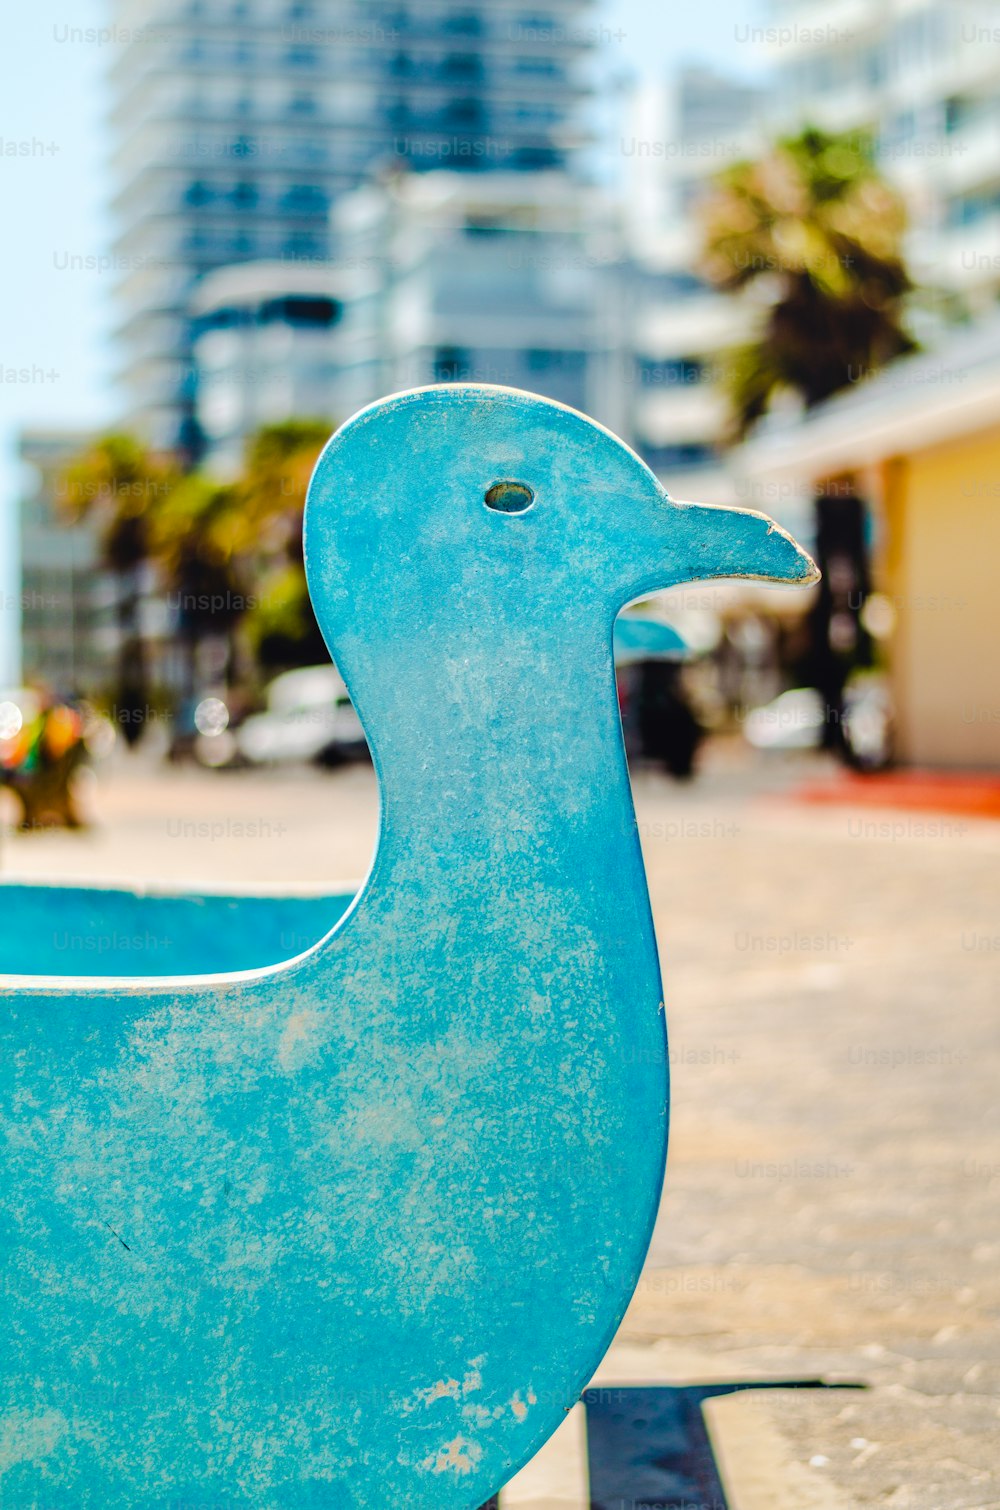 a statue of a blue duck on a sidewalk